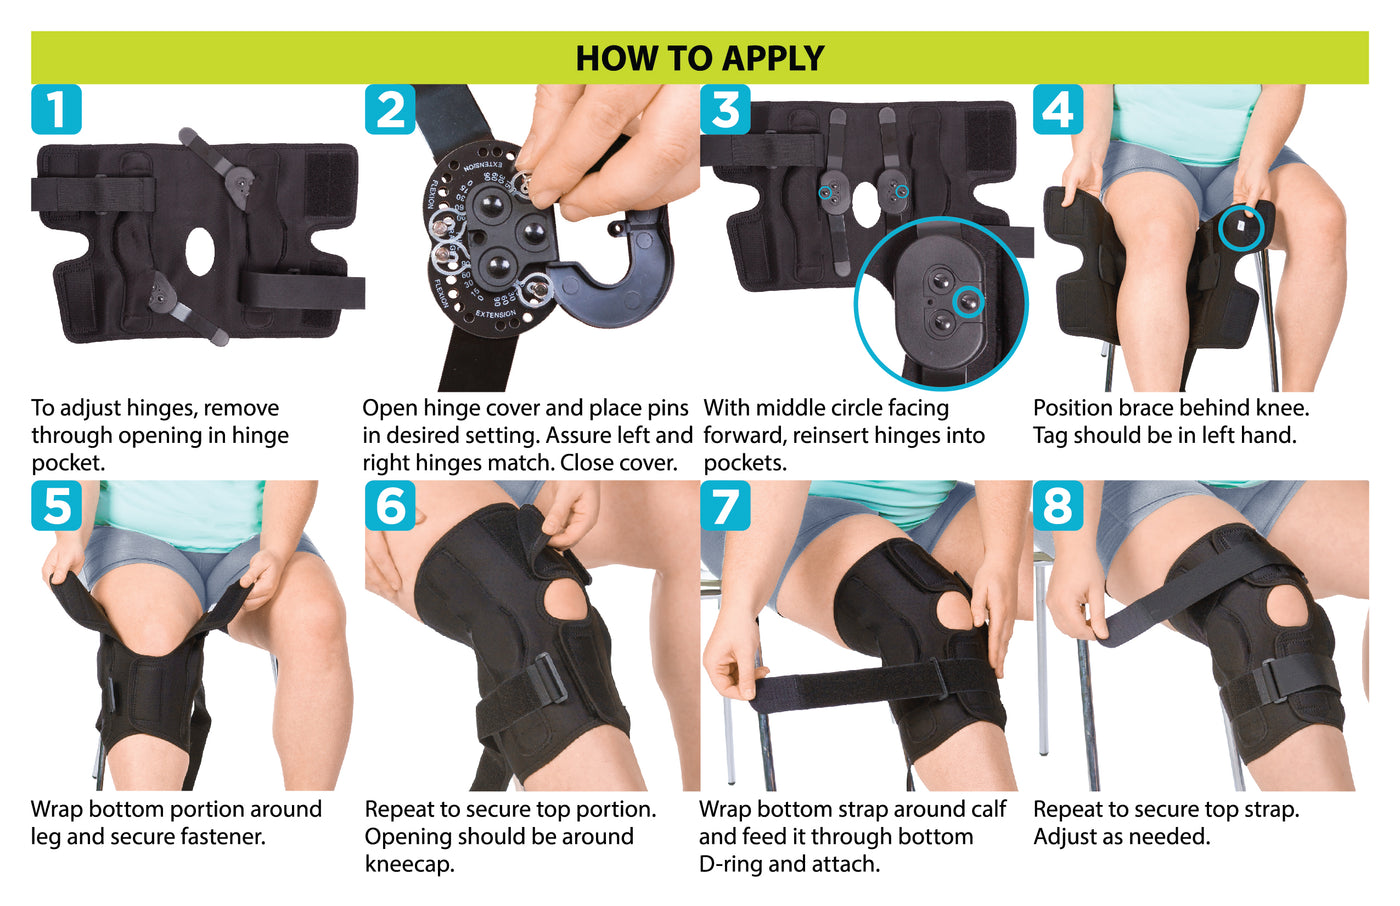 the instruction sheet for the torn meniscus knee brace